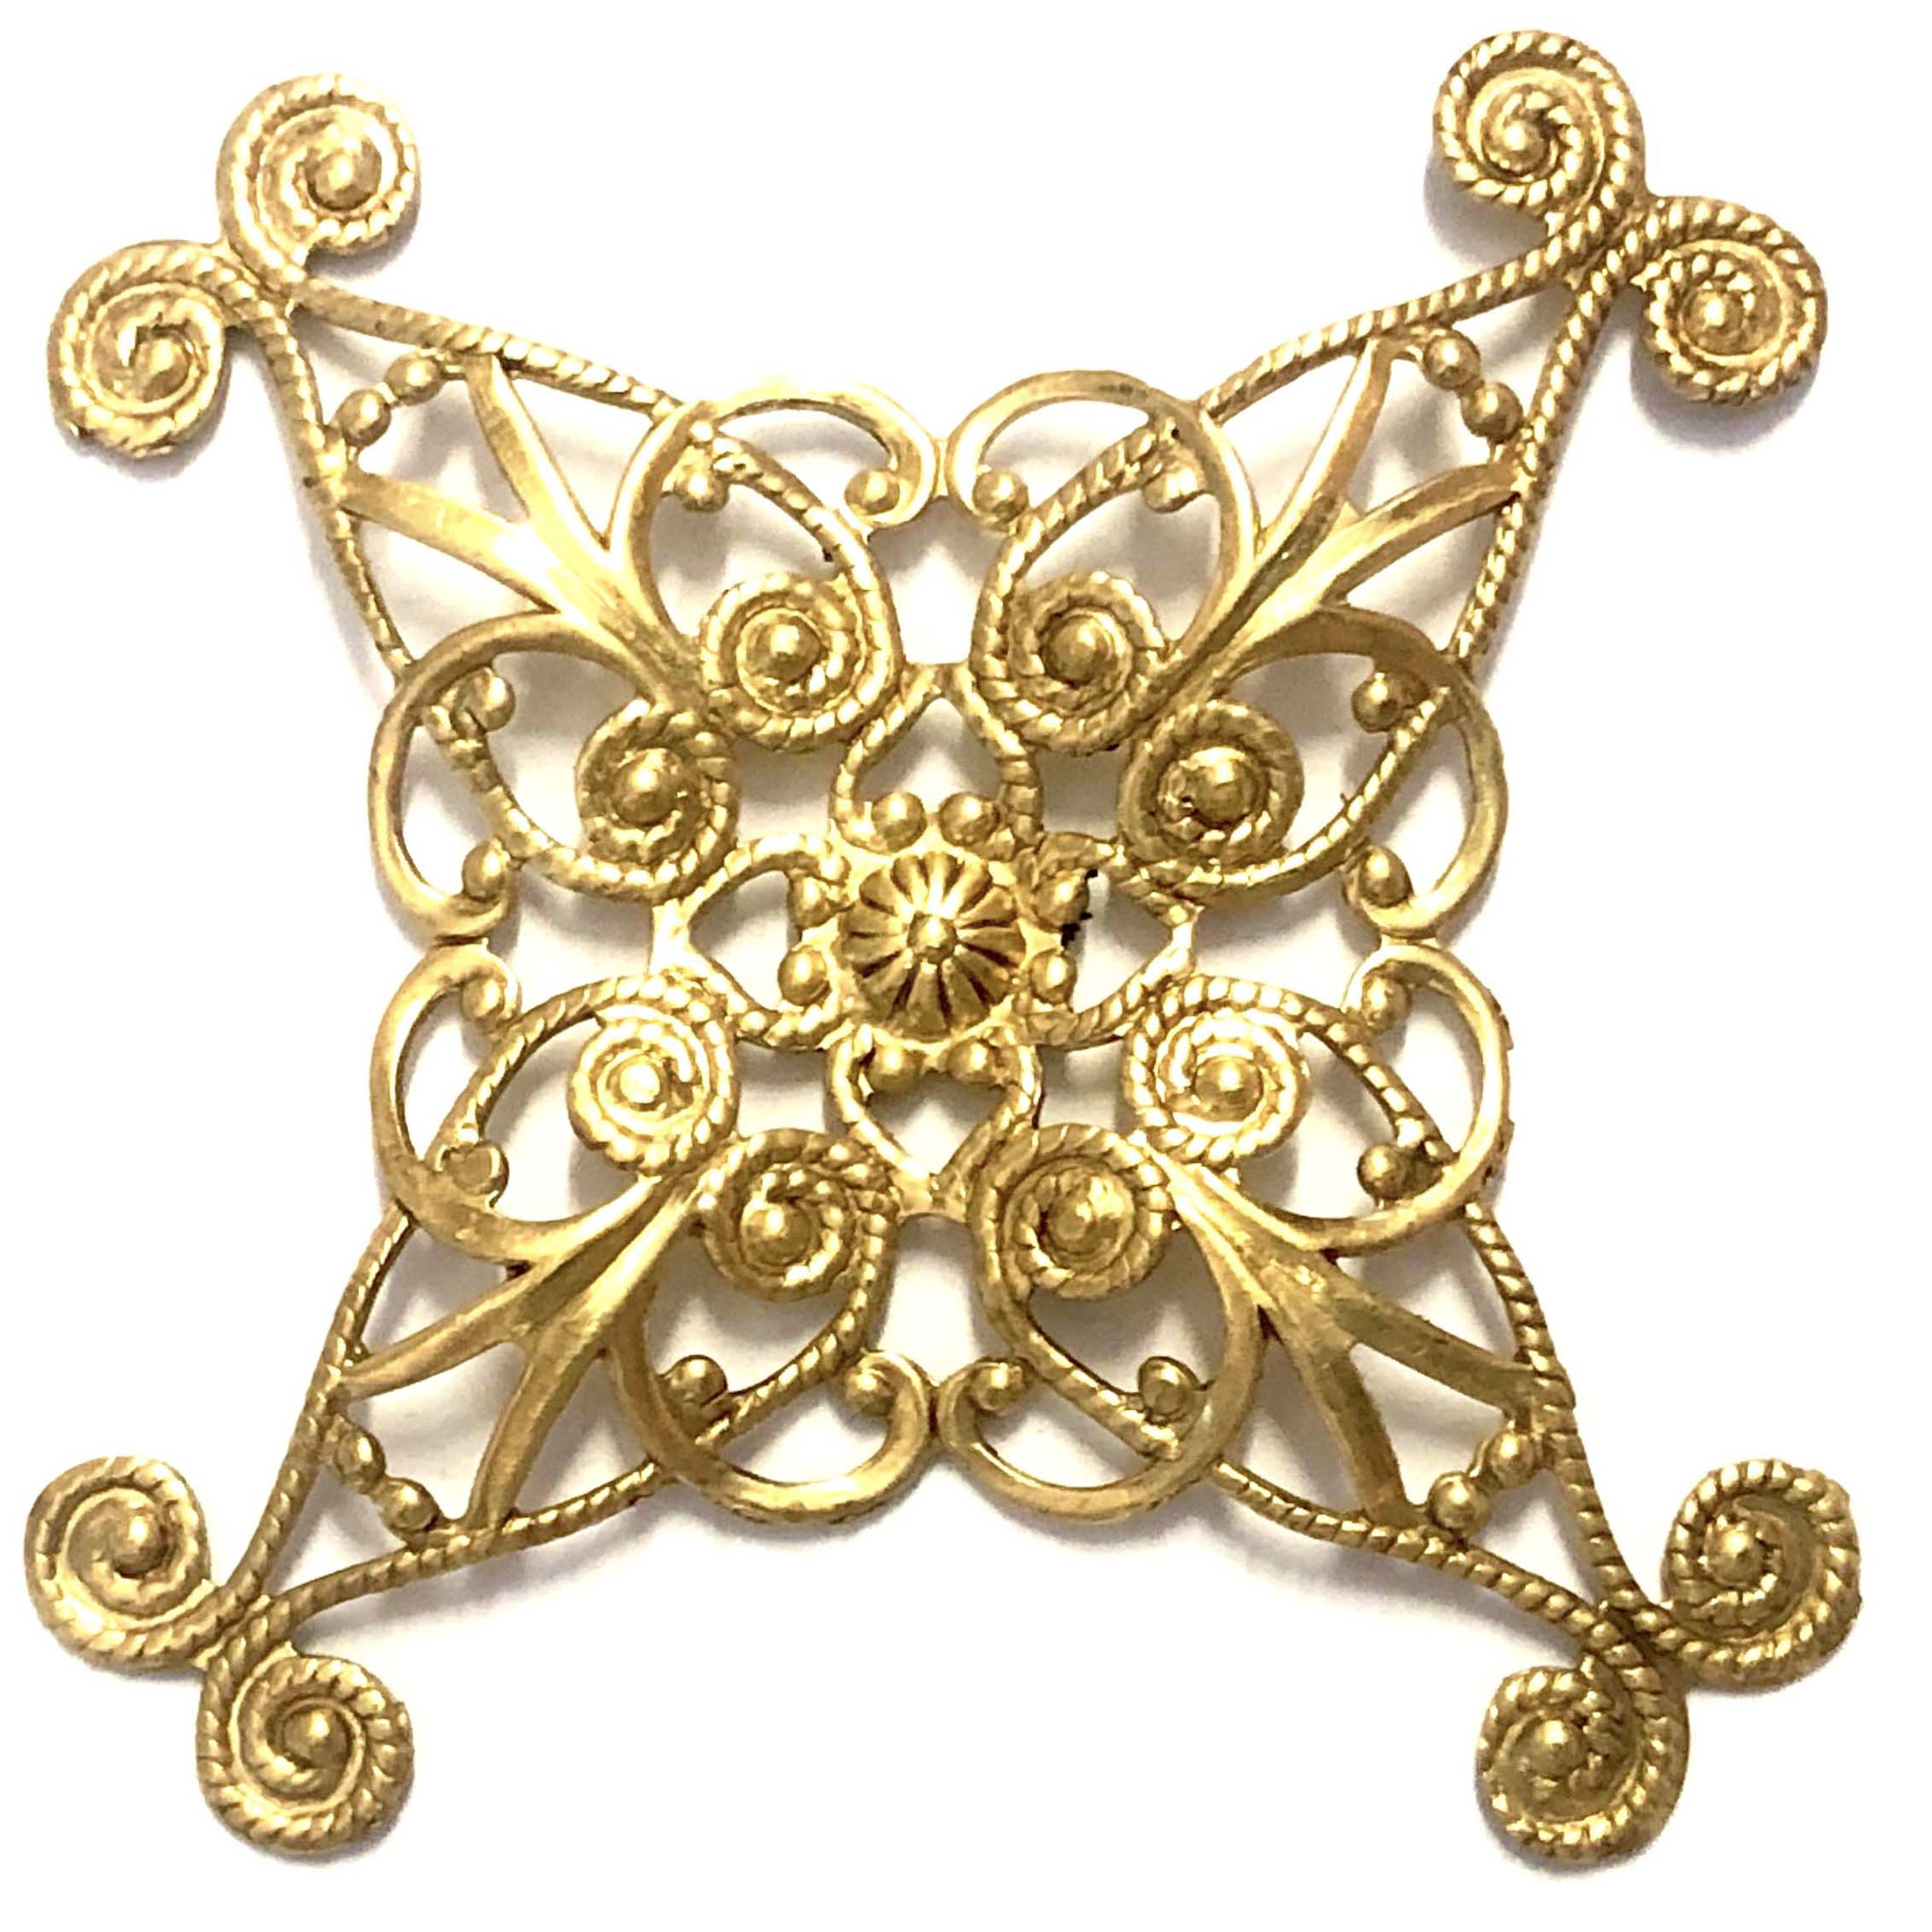 24083        2 Pc Brass Oxidized Victorian Ornate Filigree Jewelry Finding 